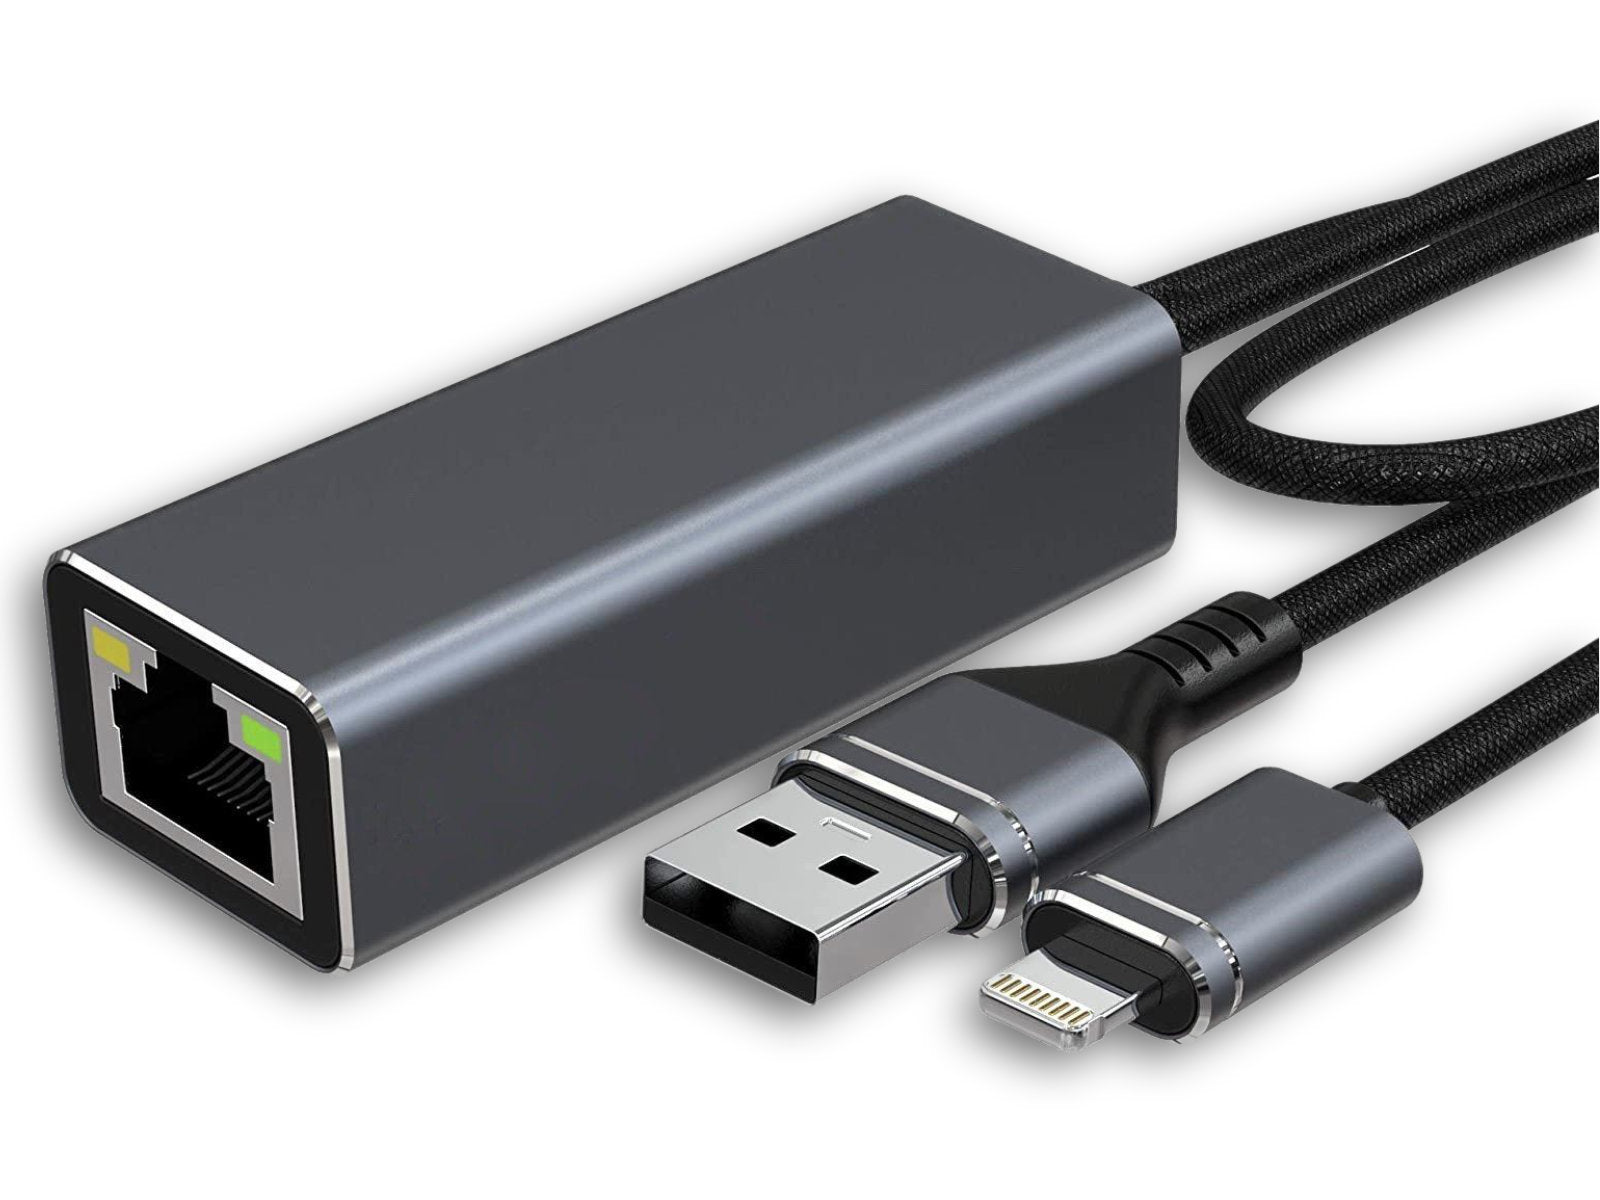 Ethernet+USB to Lightning Adapter SimpliDock